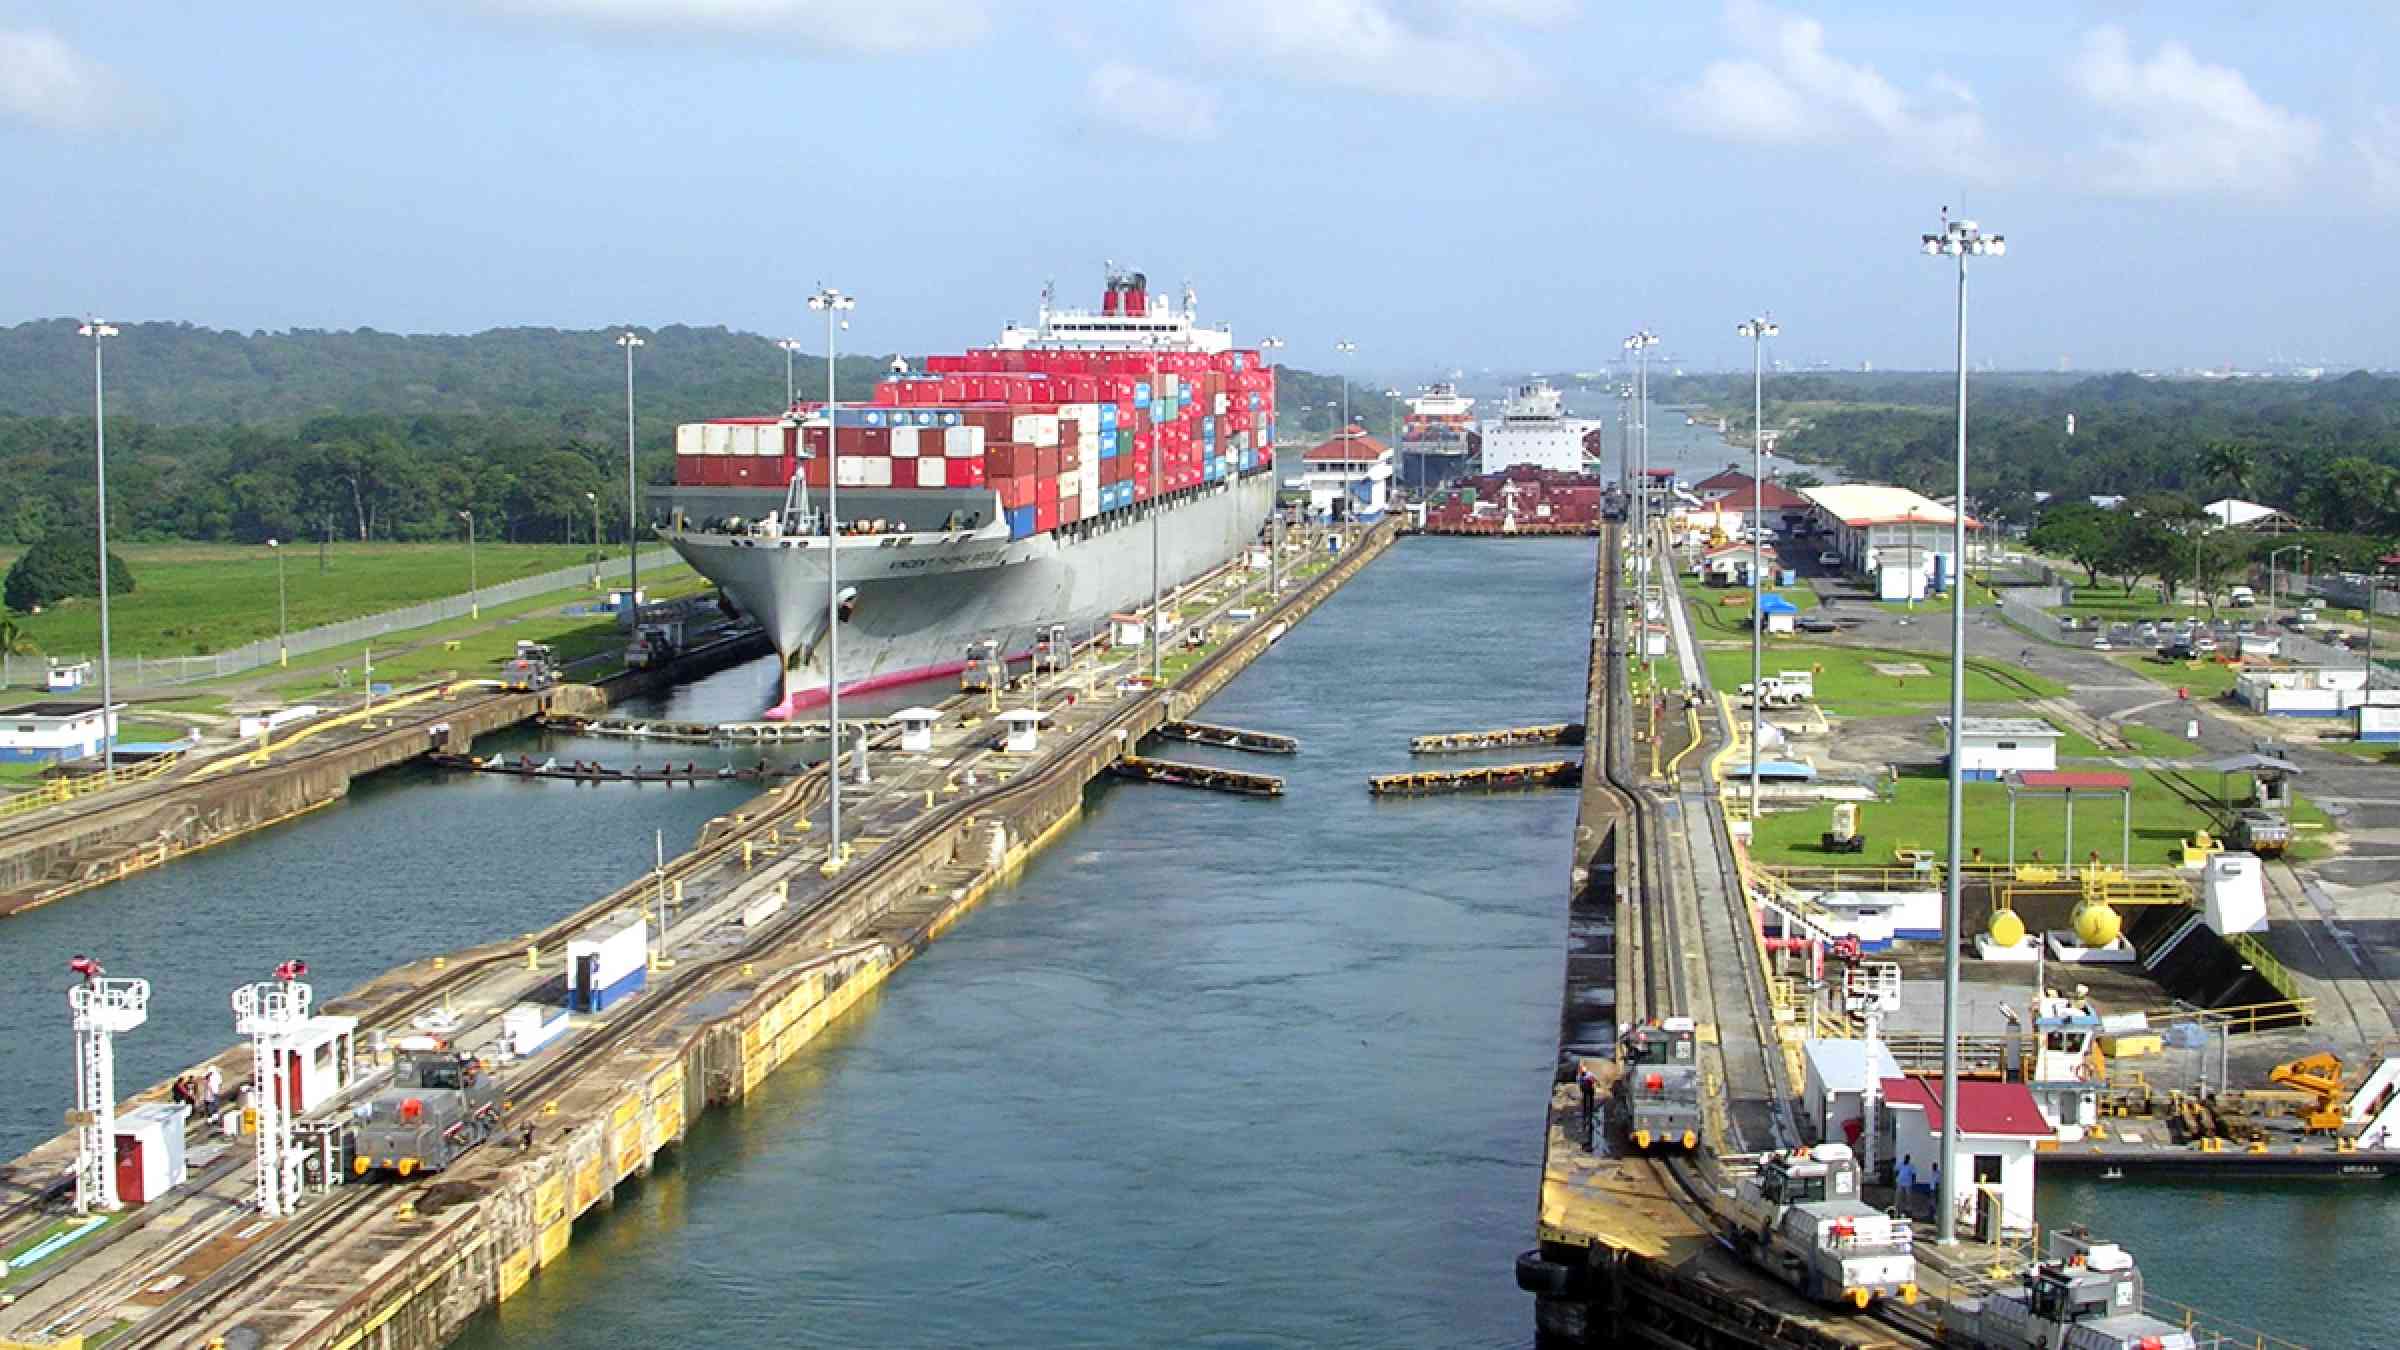 Cargo ship crossing the Panama Cannal